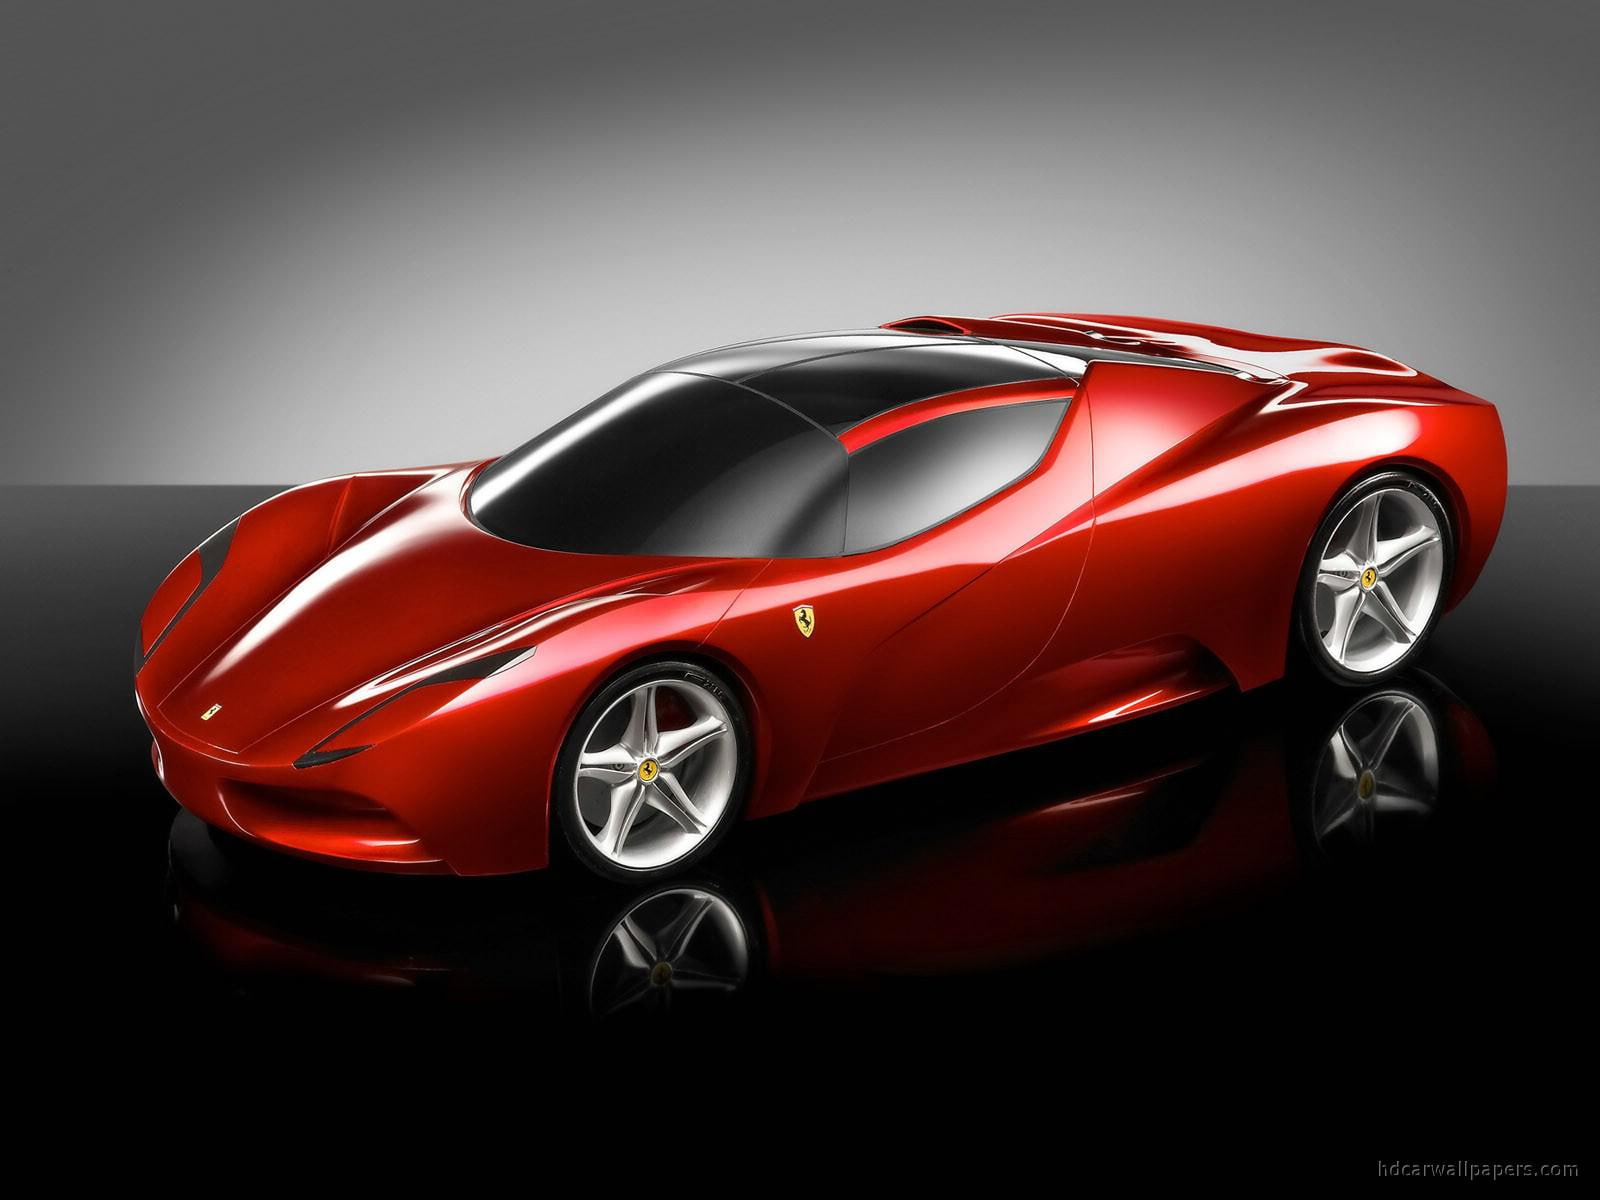 2005 Ferrari Design Competition F Zero, red ferrari sports car